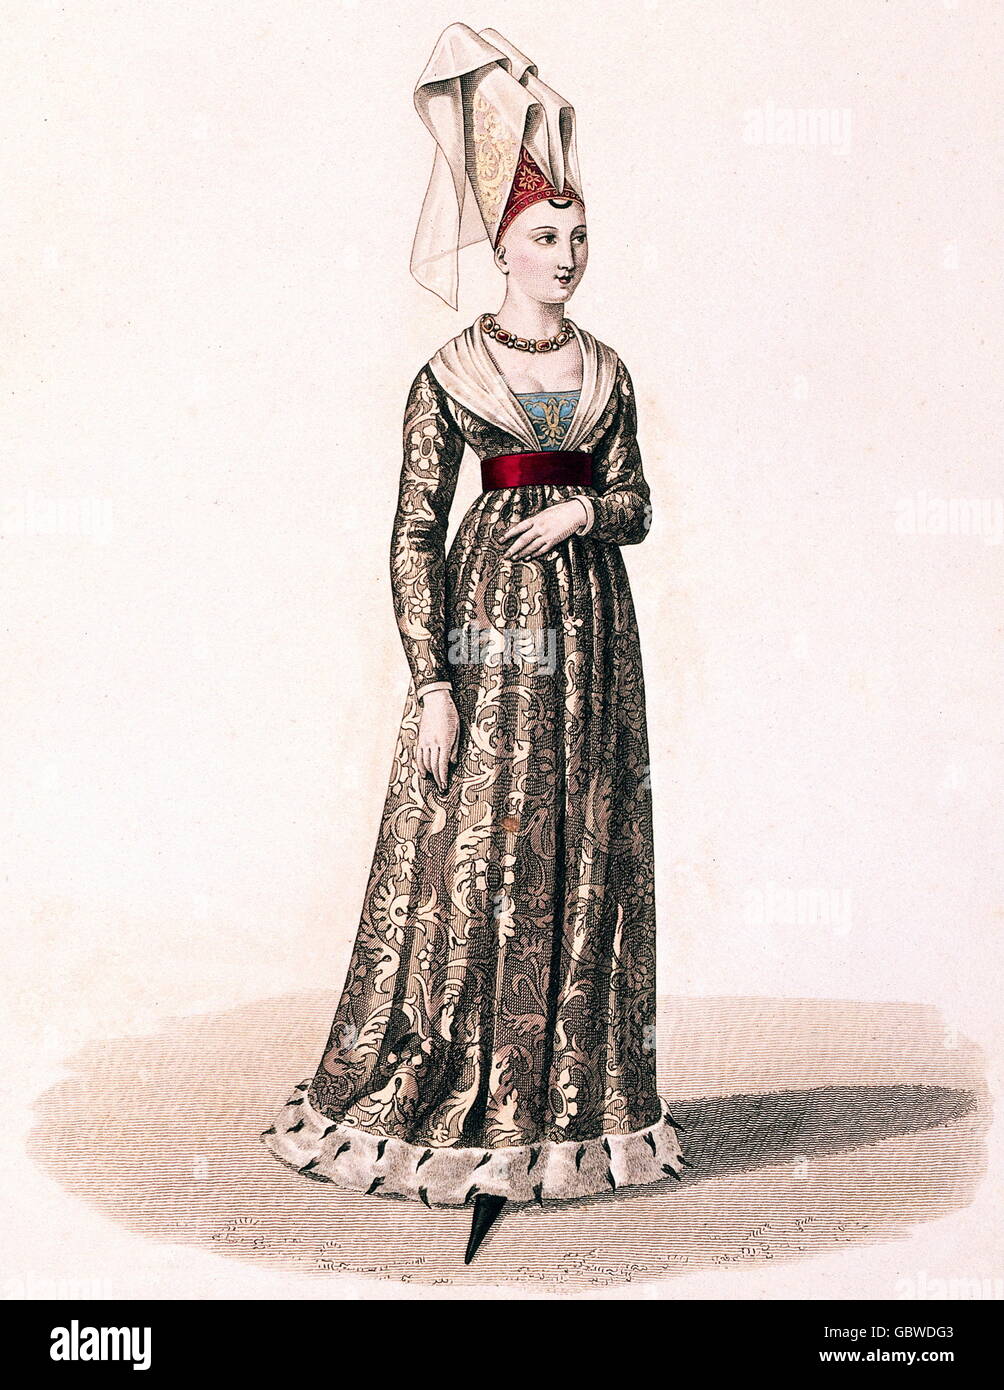 https://c8.alamy.com/comp/GBWDG3/fashion-middle-ages-ladies-fashion-female-servant-of-isabeau-of-bavaria-GBWDG3.jpg